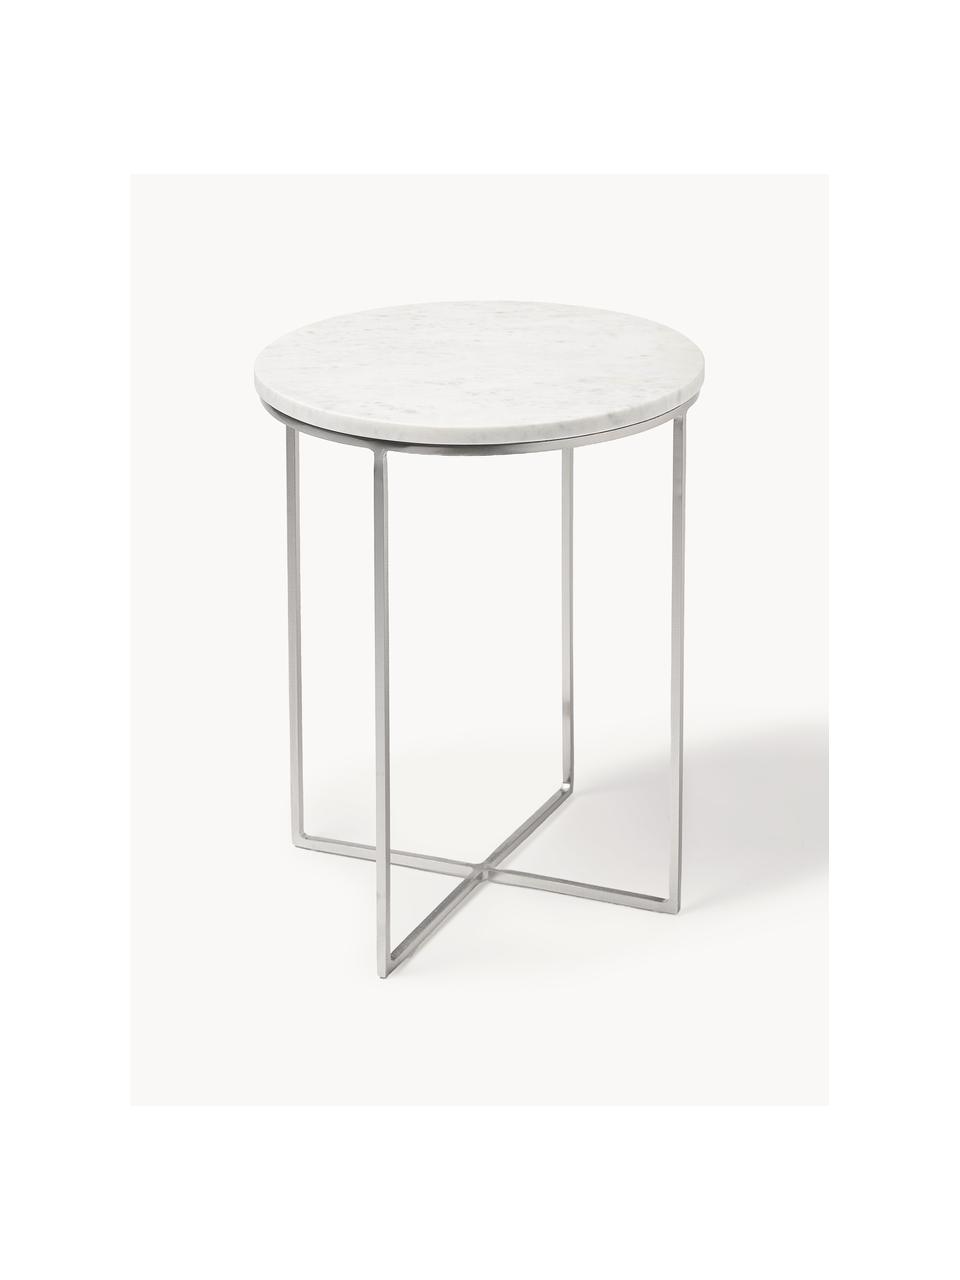 Kulatý mramorový odkládací stolek Alys, Bílá mramorovaná, stříbrná, Ø 40 cm, V 50 cm